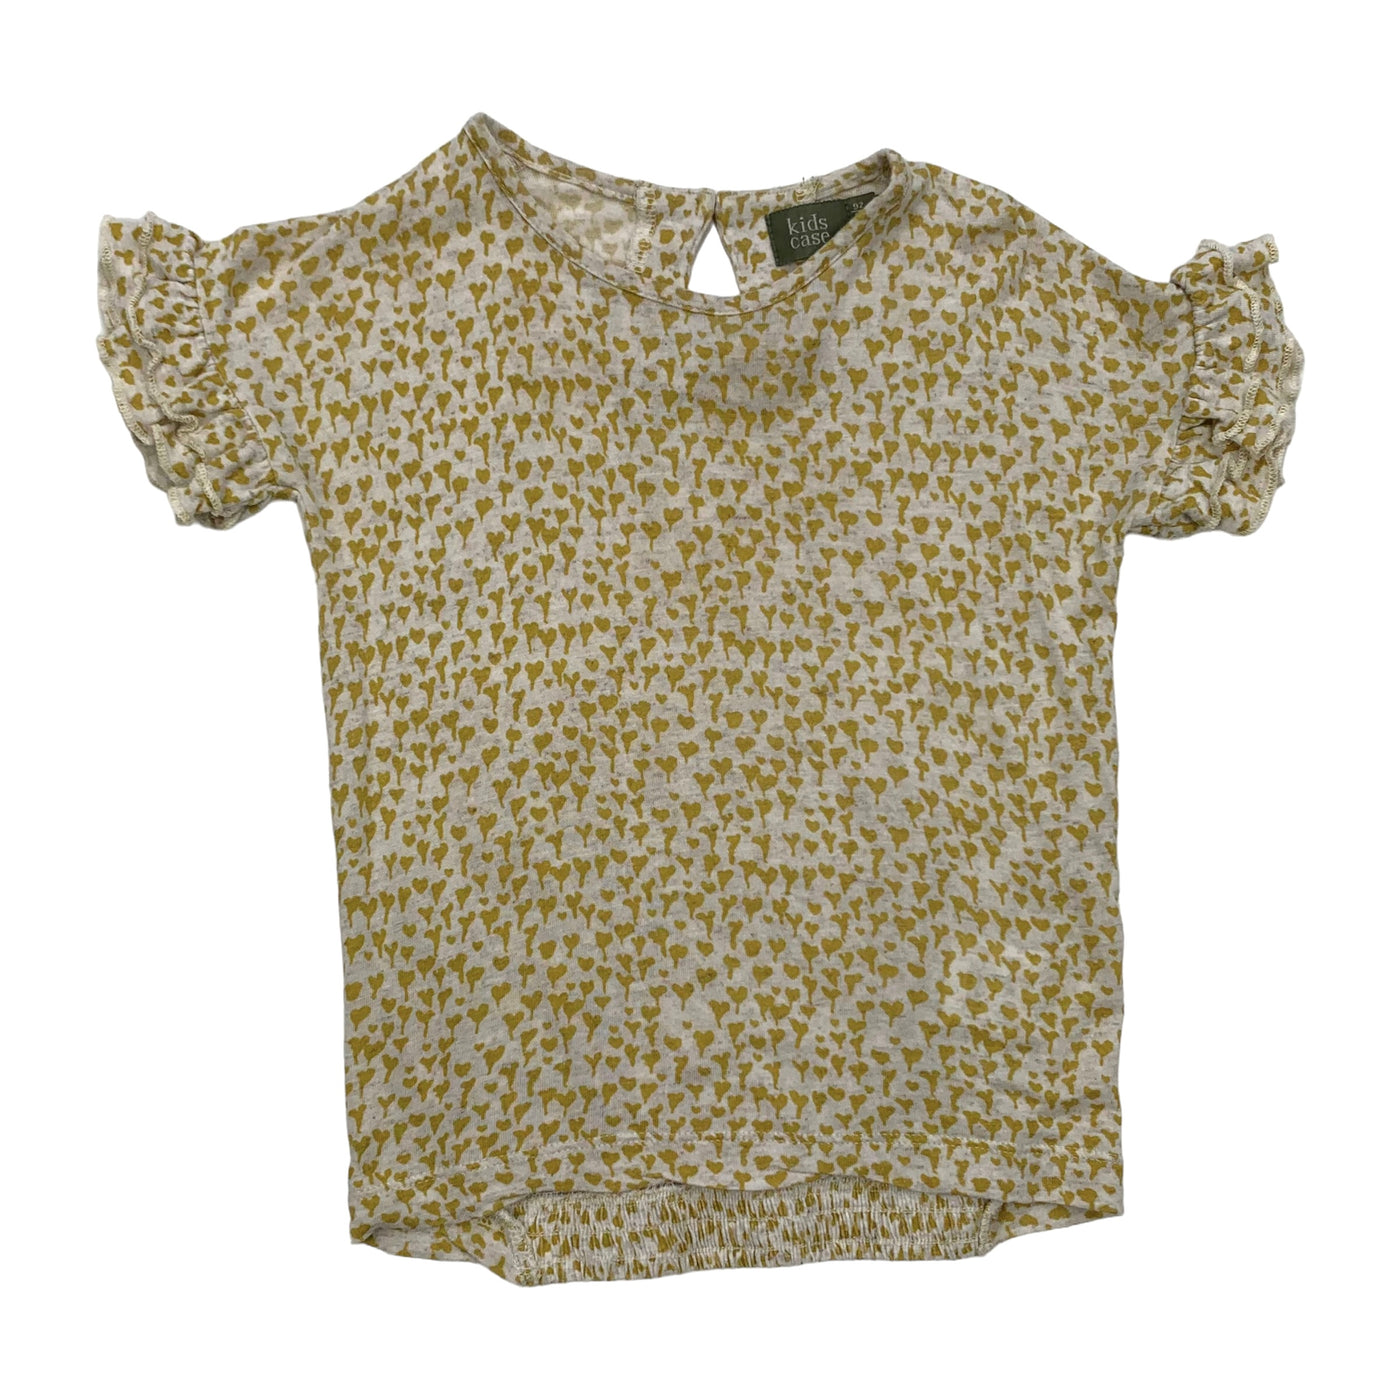 Kidscase T-shirt grey yellow print size 2 years